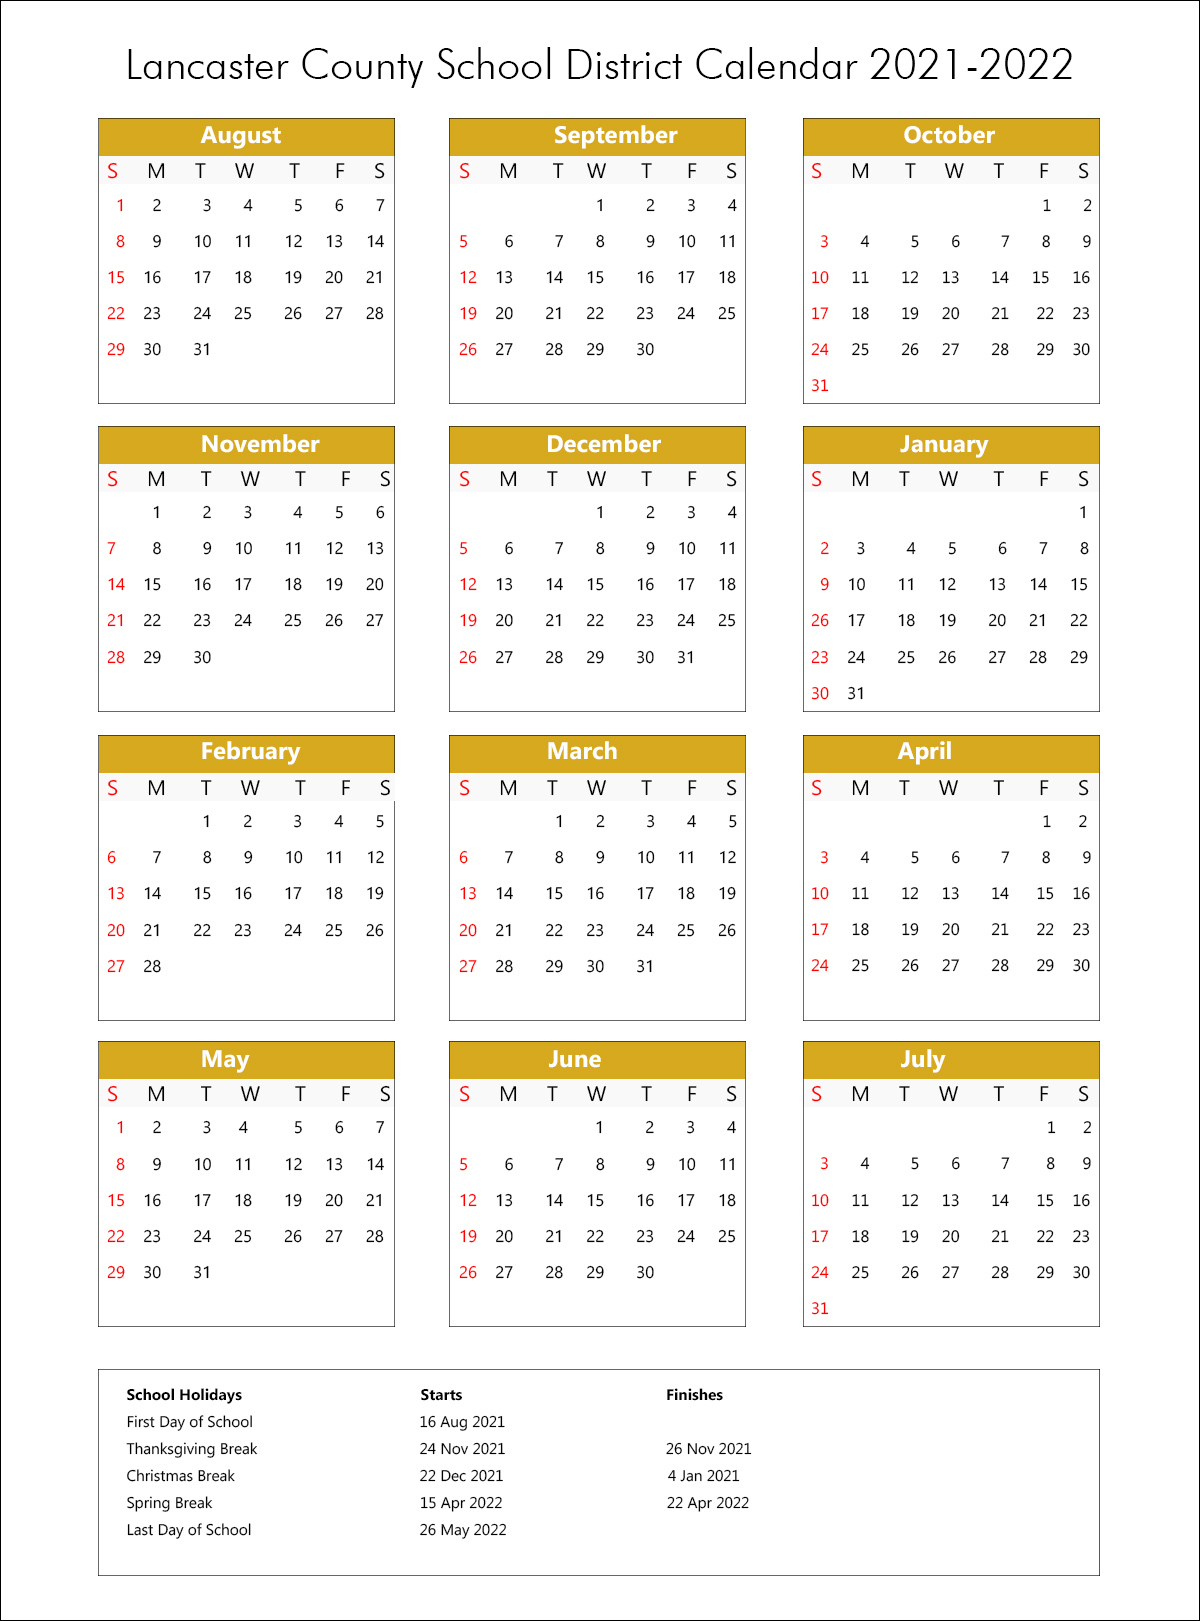 Lancaster School District Calendar 2021